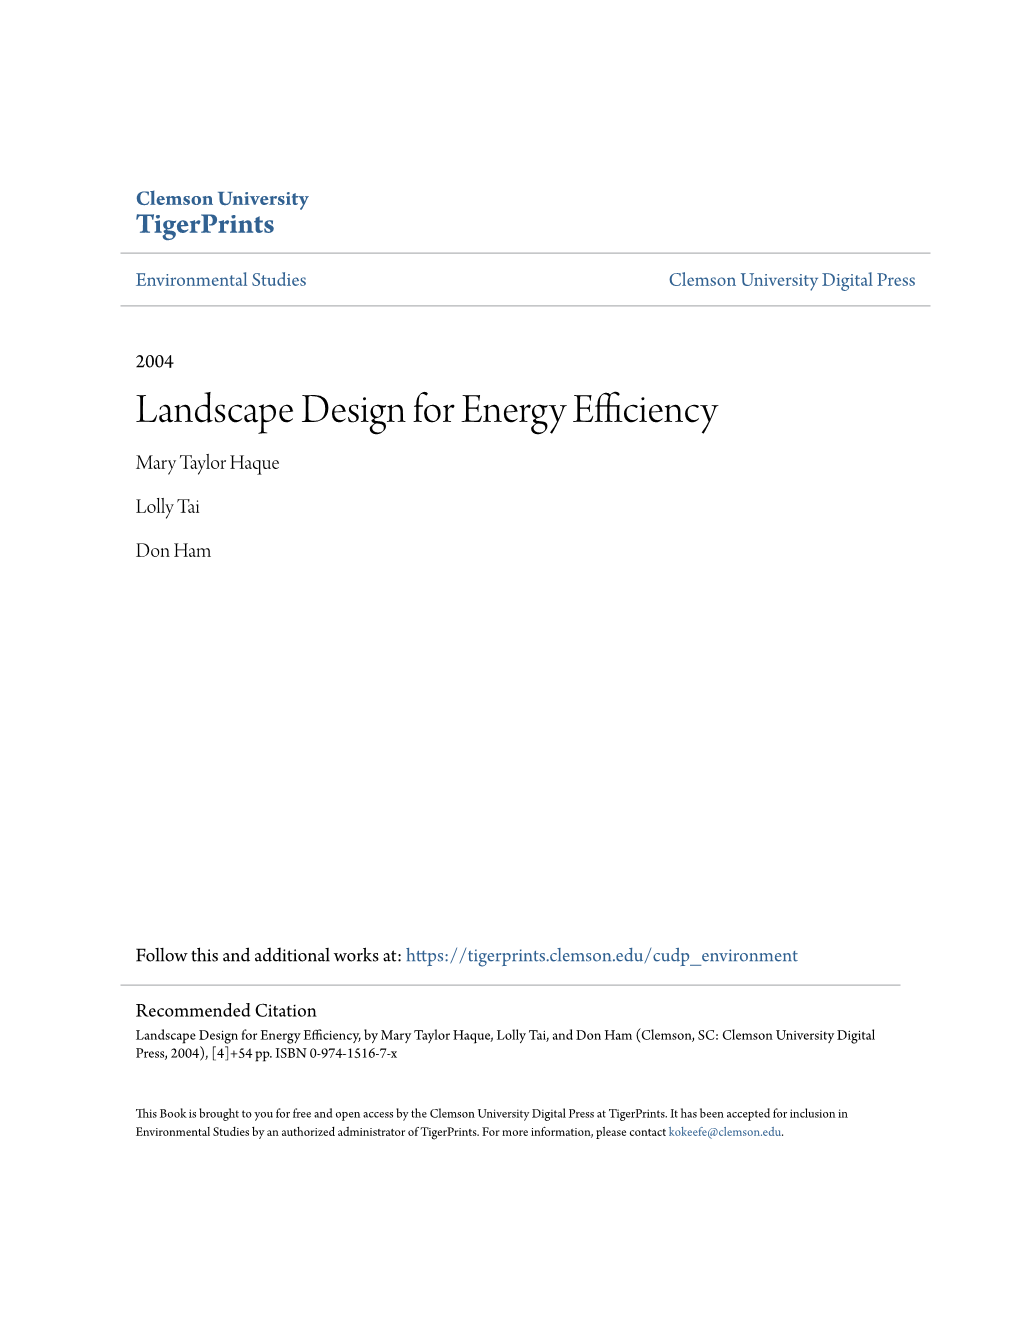 Landscape Design for Energy Efficiency Mary Taylor Haque